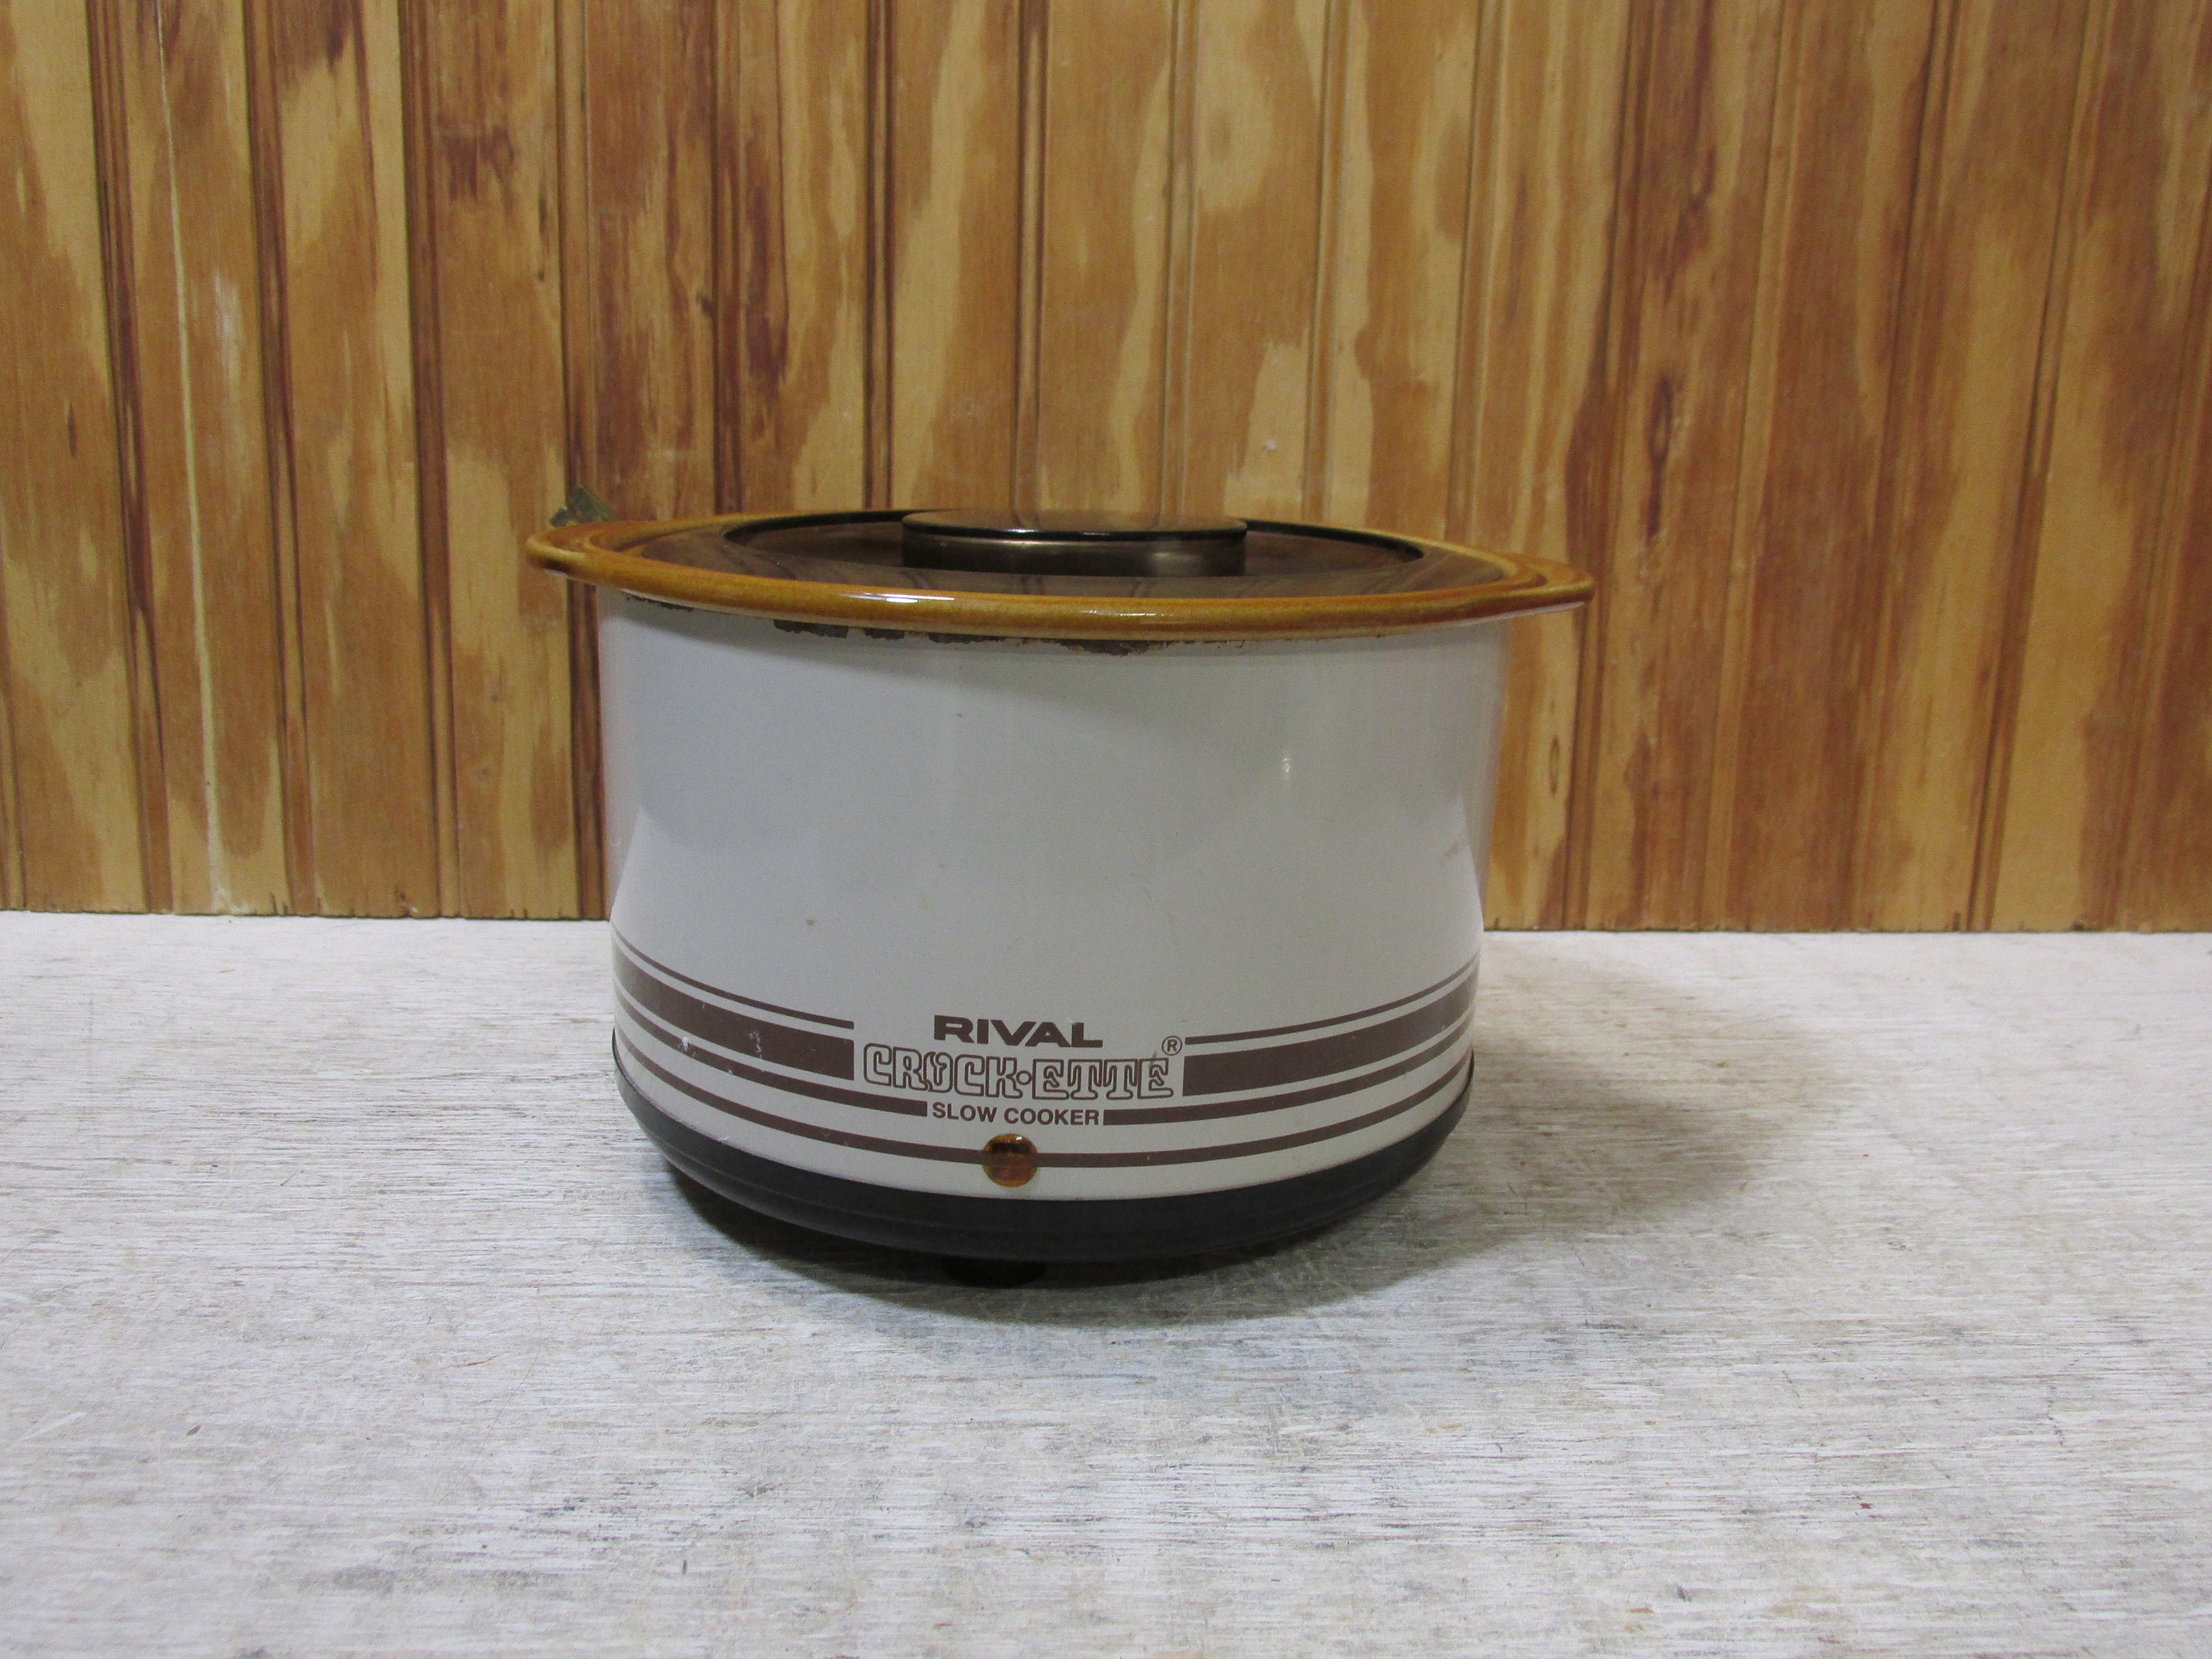 Vintage Rival Crock-ette Mini Crock Pot Country Heart Americana 1 Qt